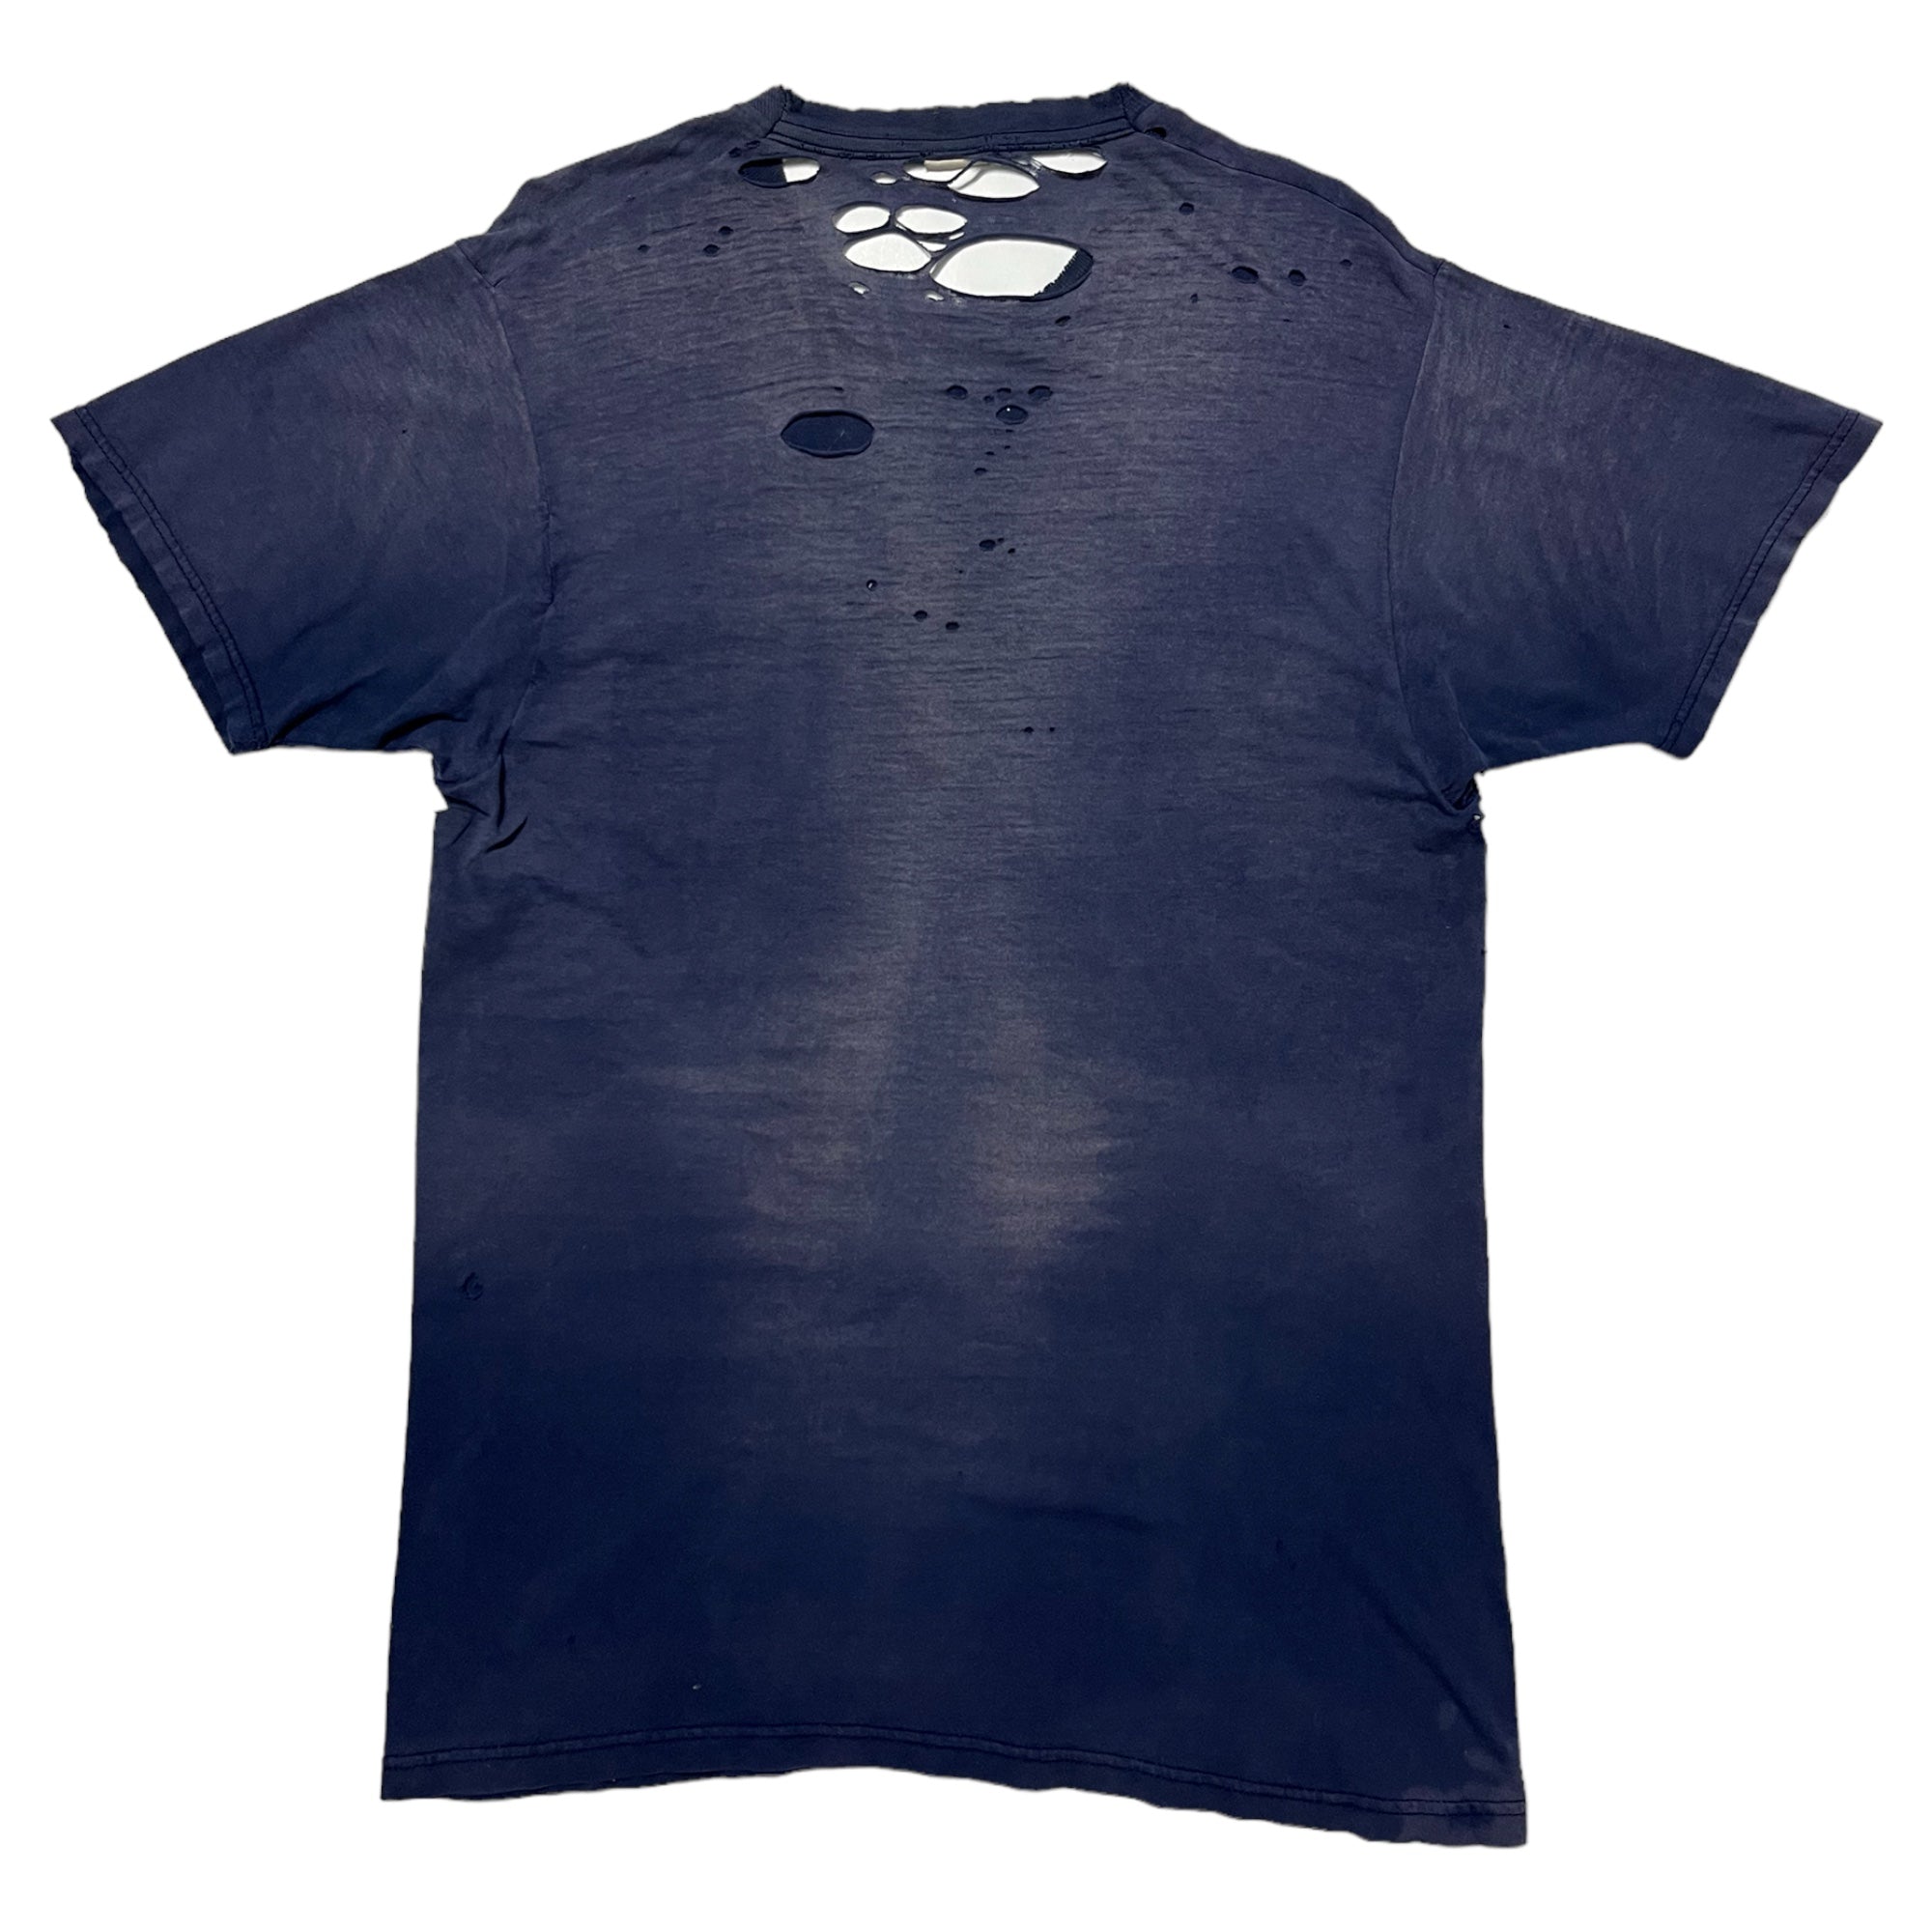 ‘90s Heavily Distressed & Sun Faded Pocket T-Shirt - Faded Navy - L